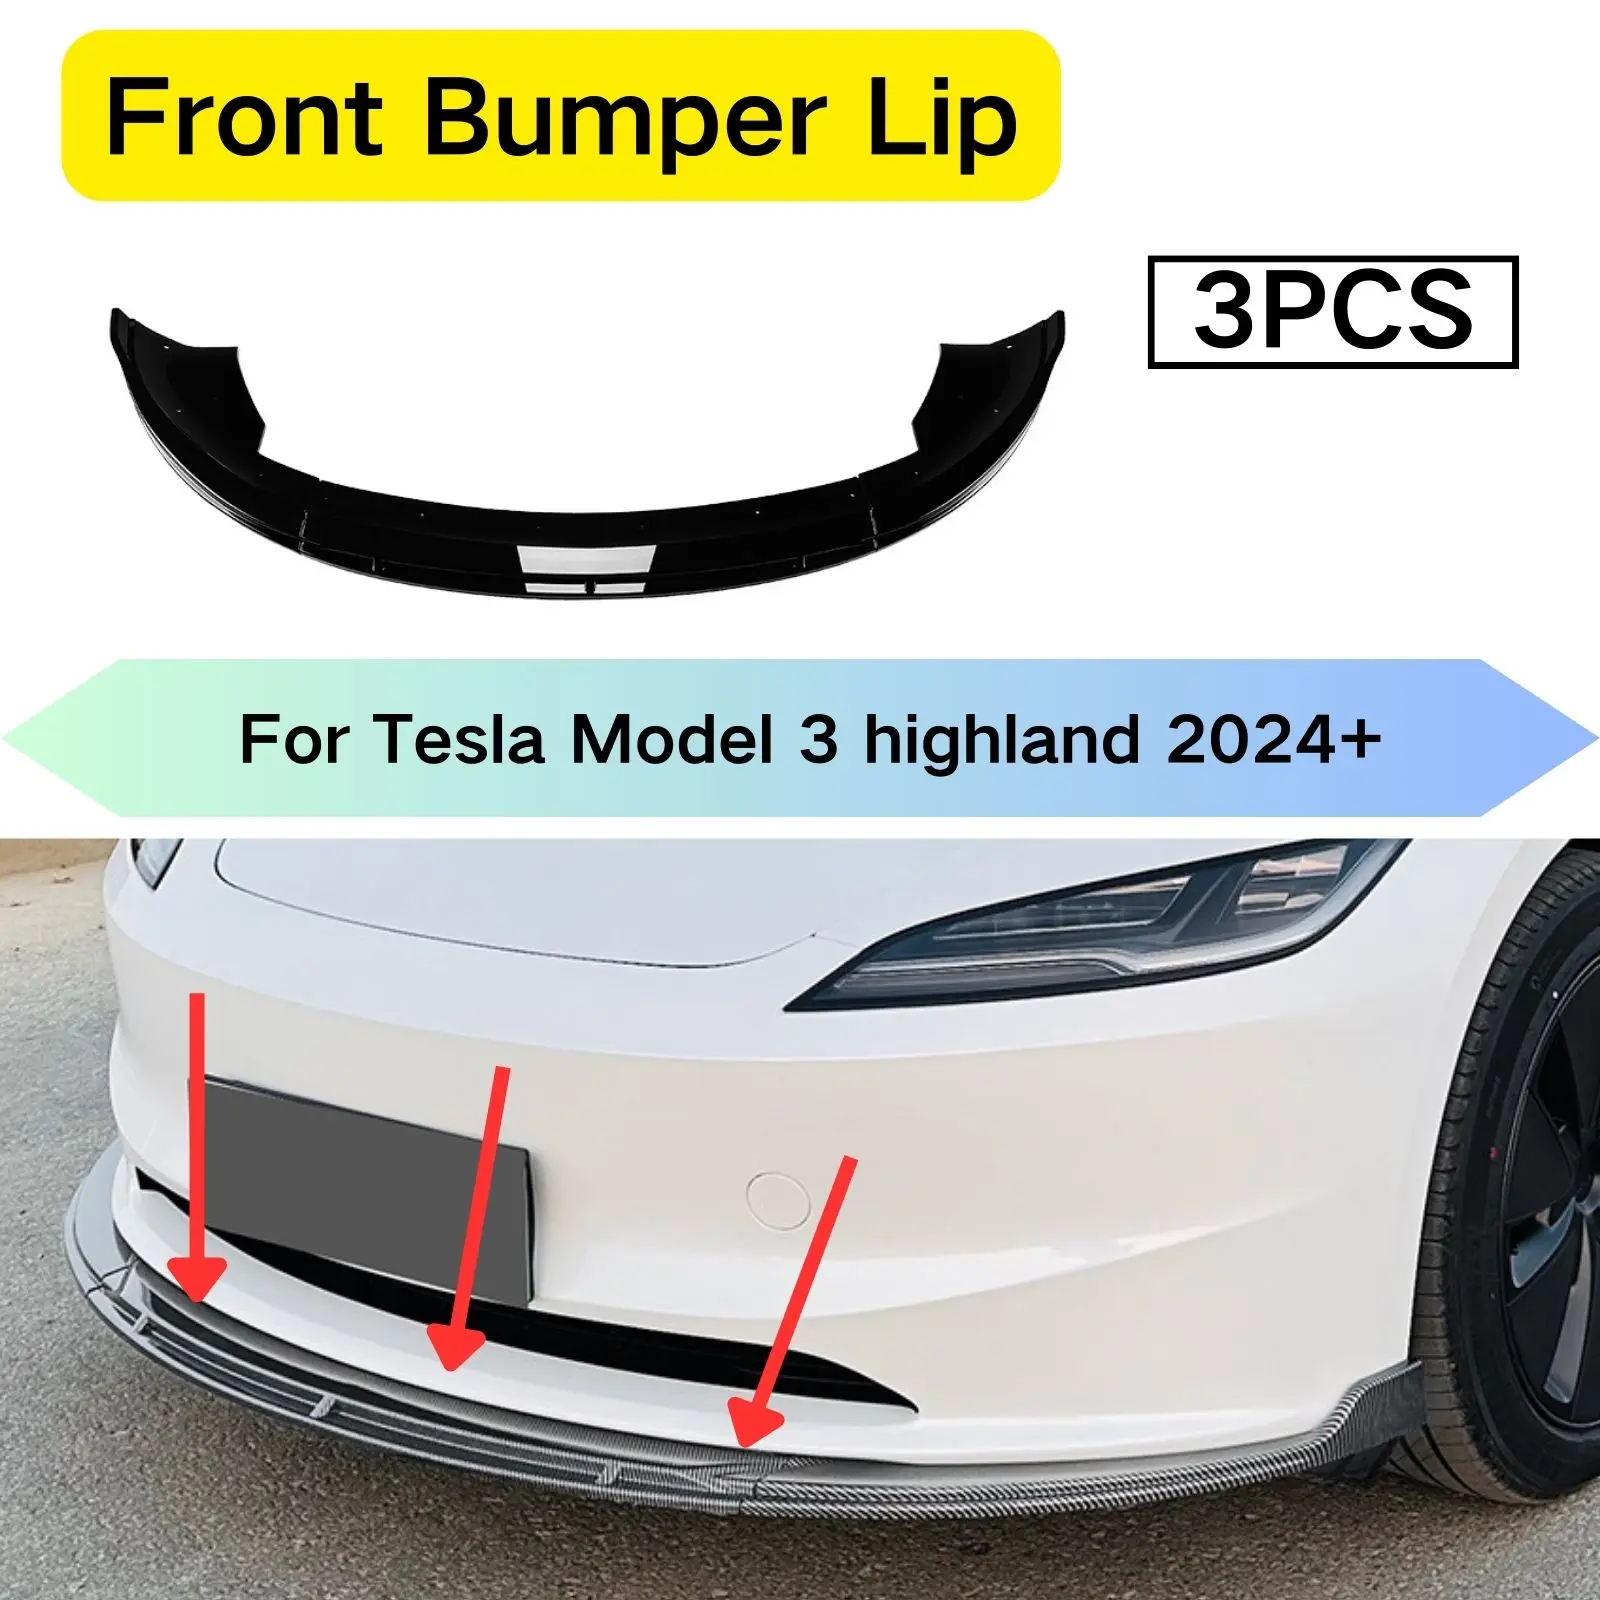 

Front Bumper Lip For Tesla Model 3 highland 2024+ Car Accessories Spoiler Splitter Spoiler Splitter 3PCS Carbon Fiber Look